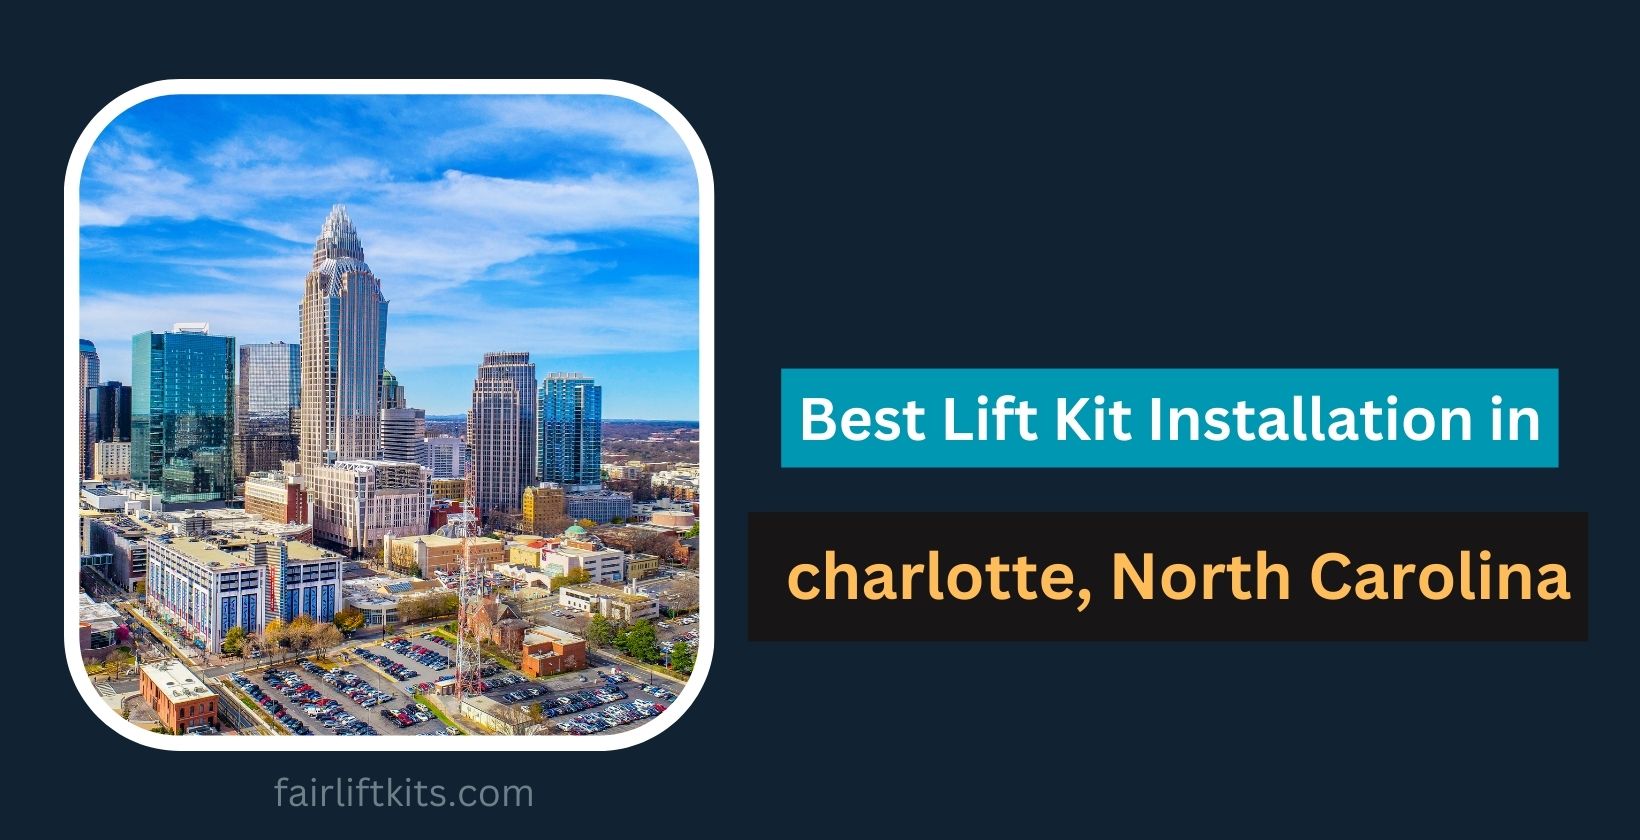 10 Best Lift Kit Installation in Charlotte